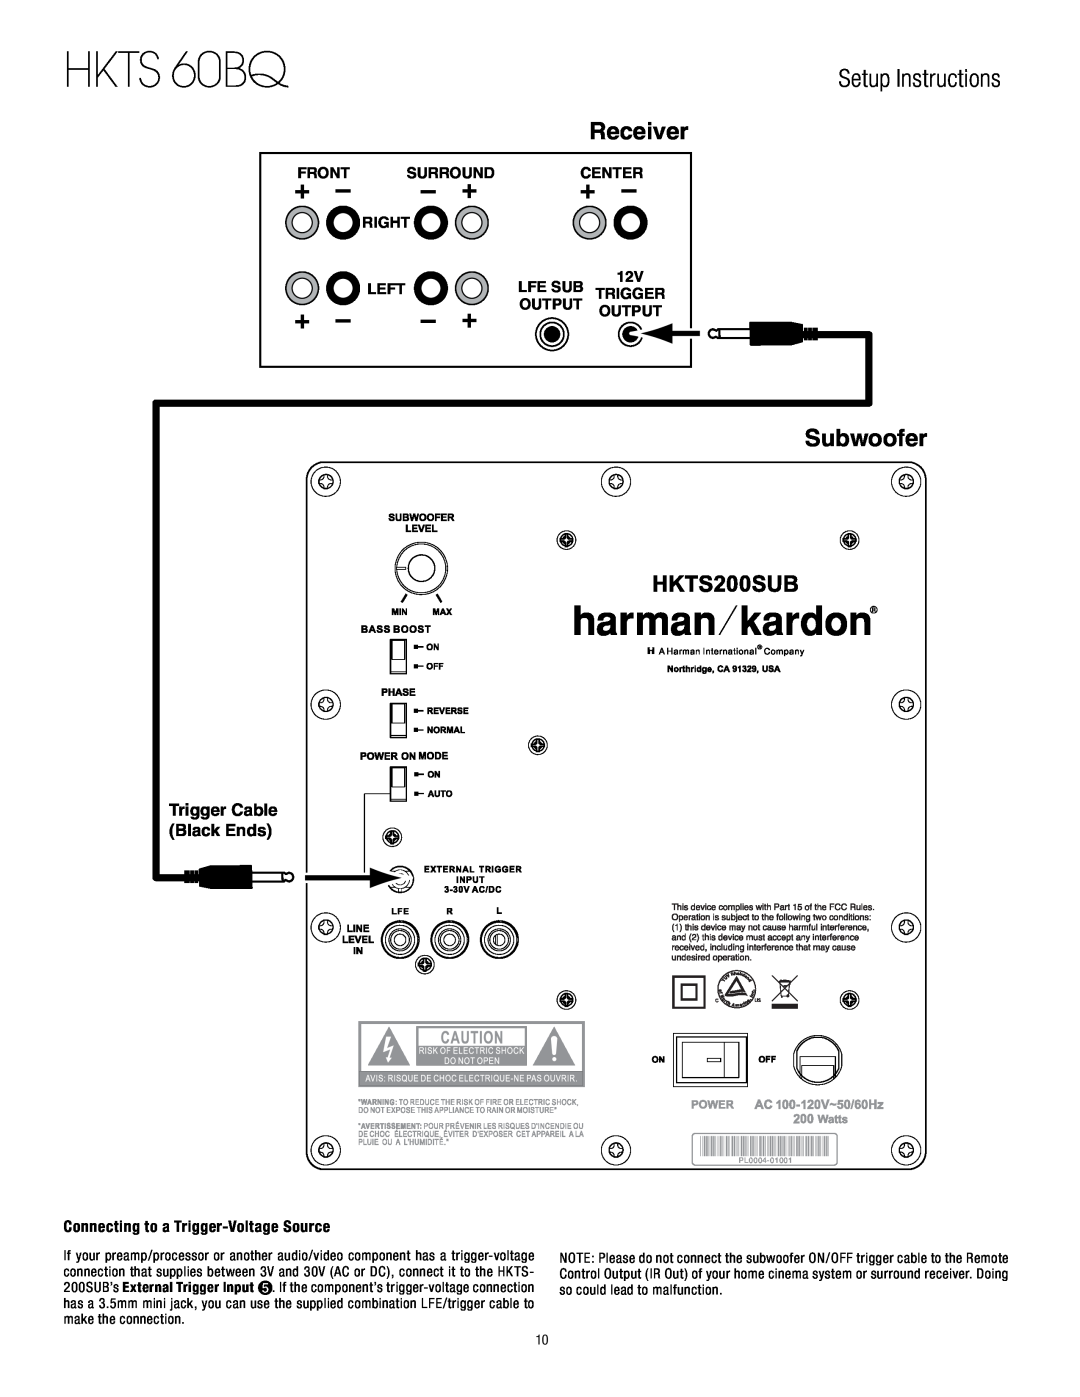 Harman-Kardon Trigger Cable, Black Ends, Front, Surround, Right, Center, Left, Lfe Sub, Output, HKTS 60BQ, Receiver 